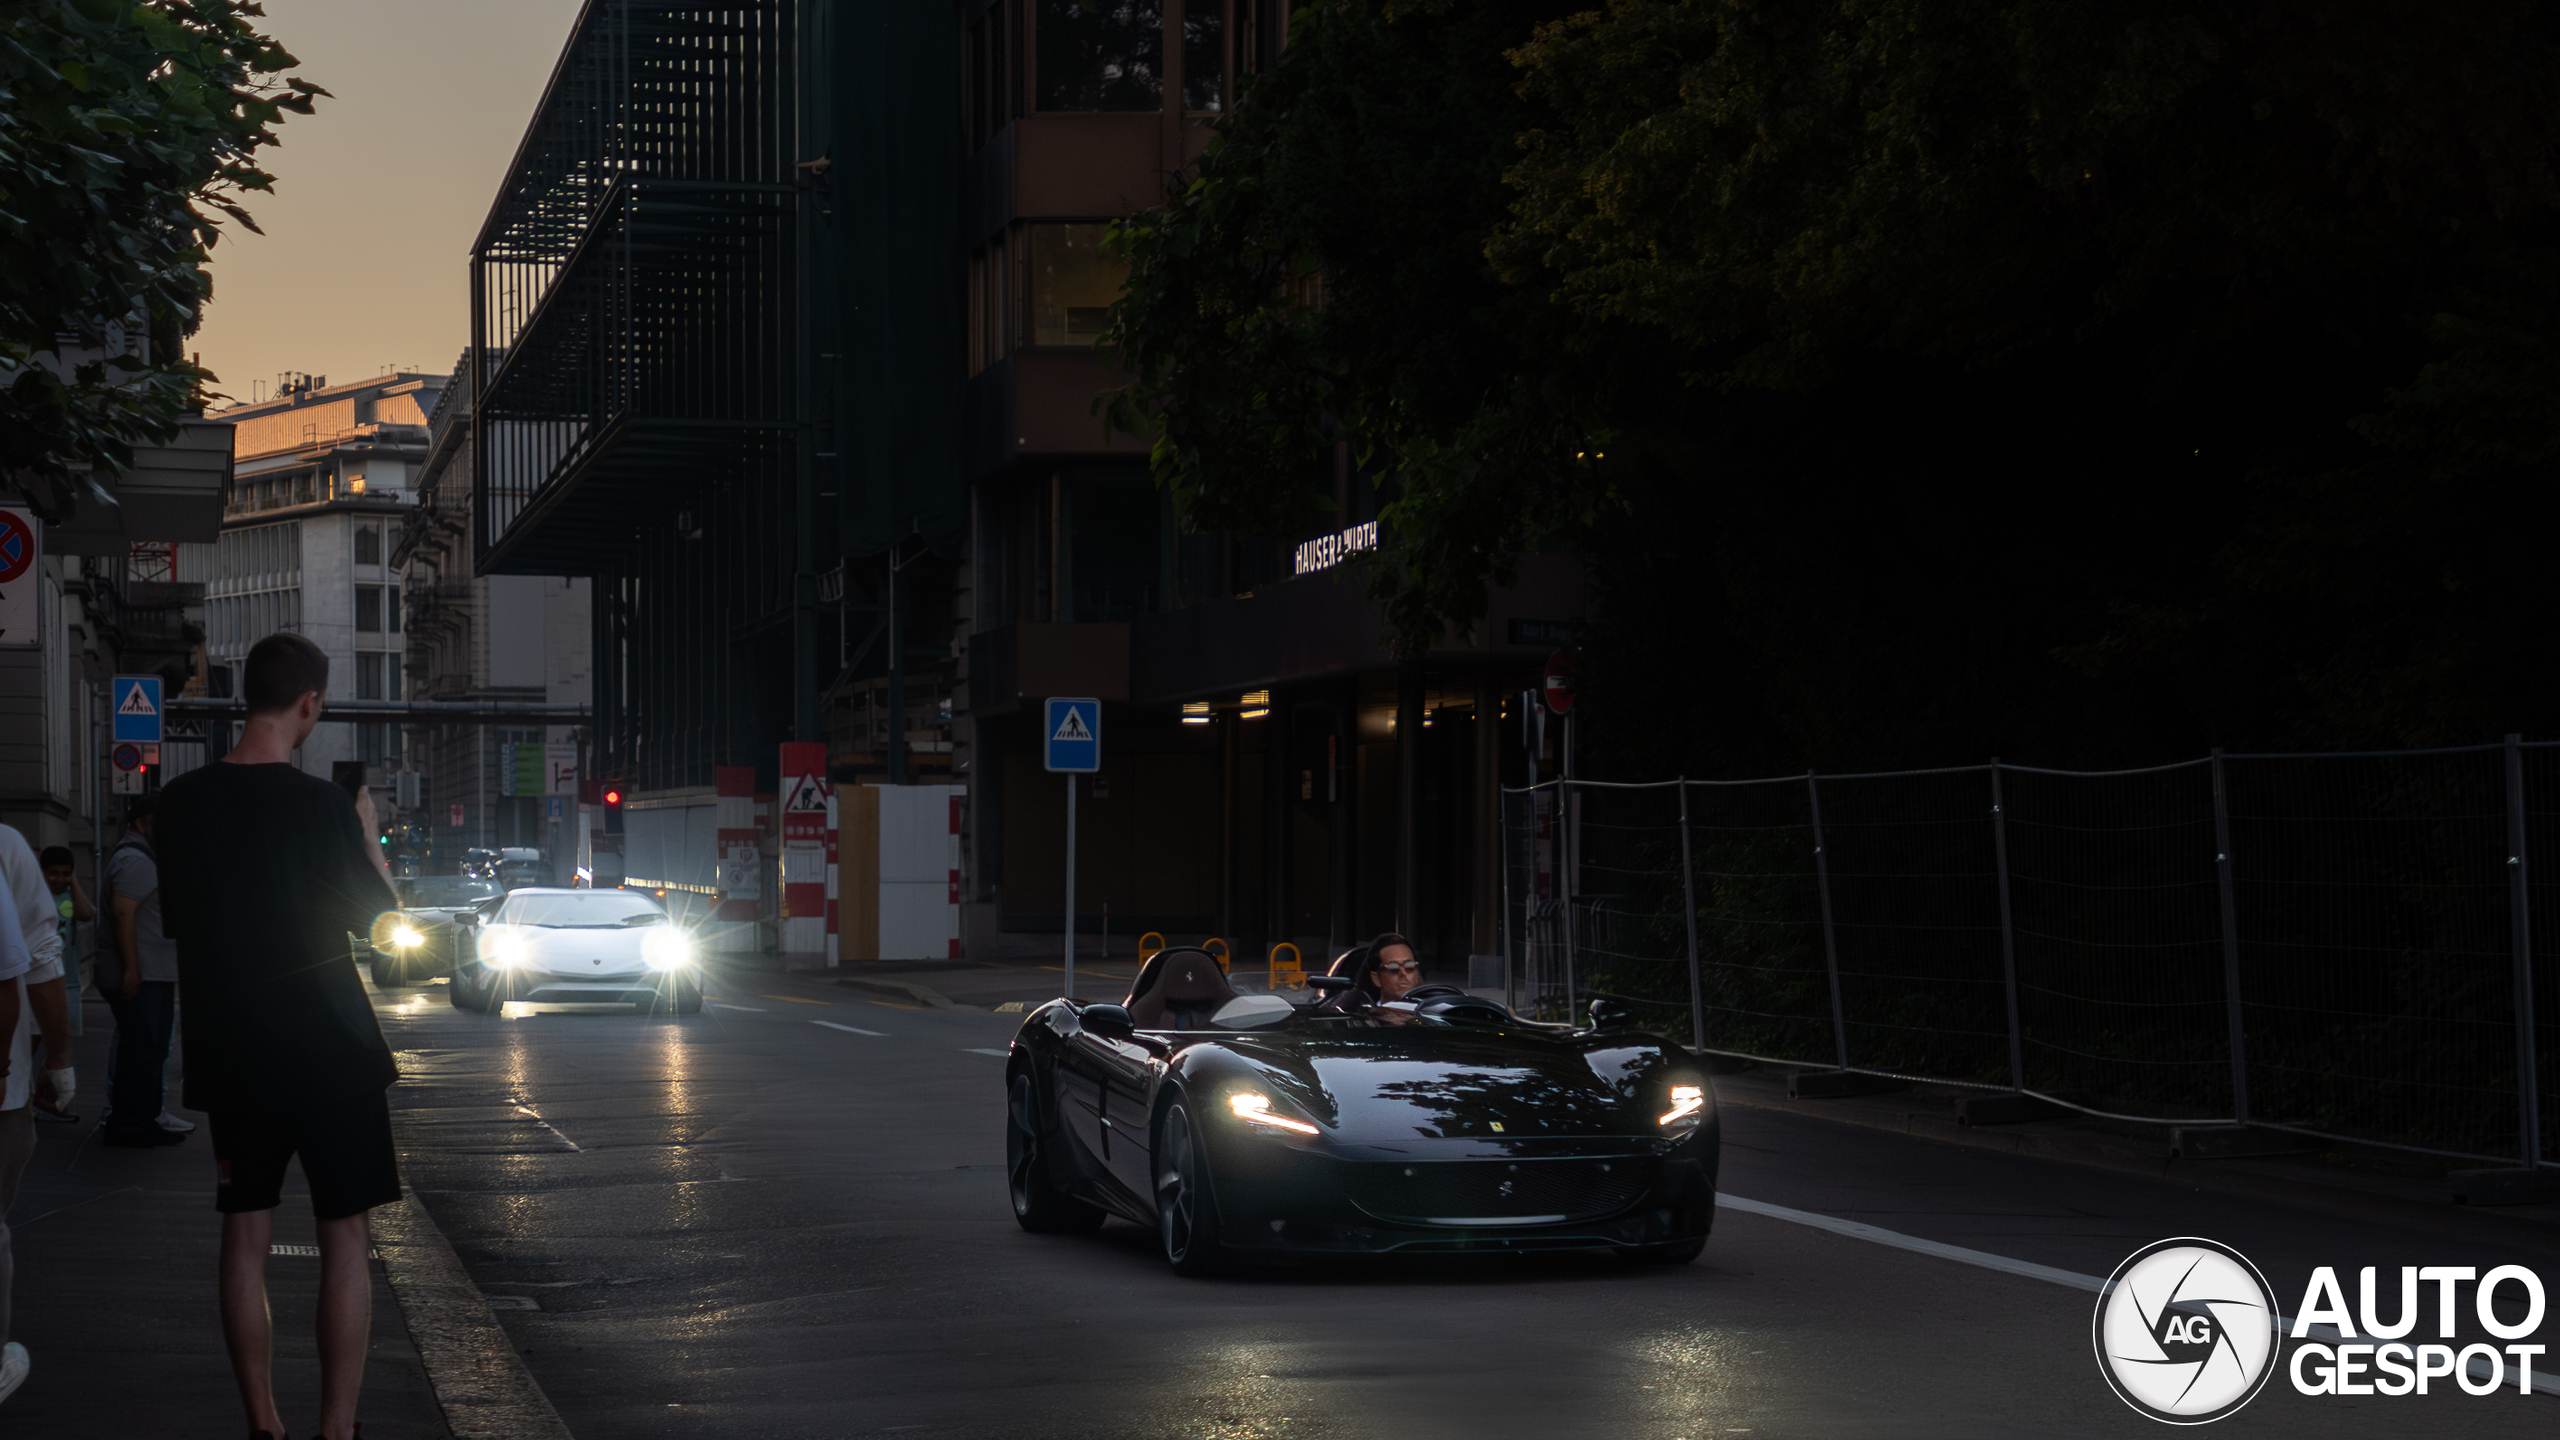 An Aventador SV and a Monza SP2 drive together through Zurich